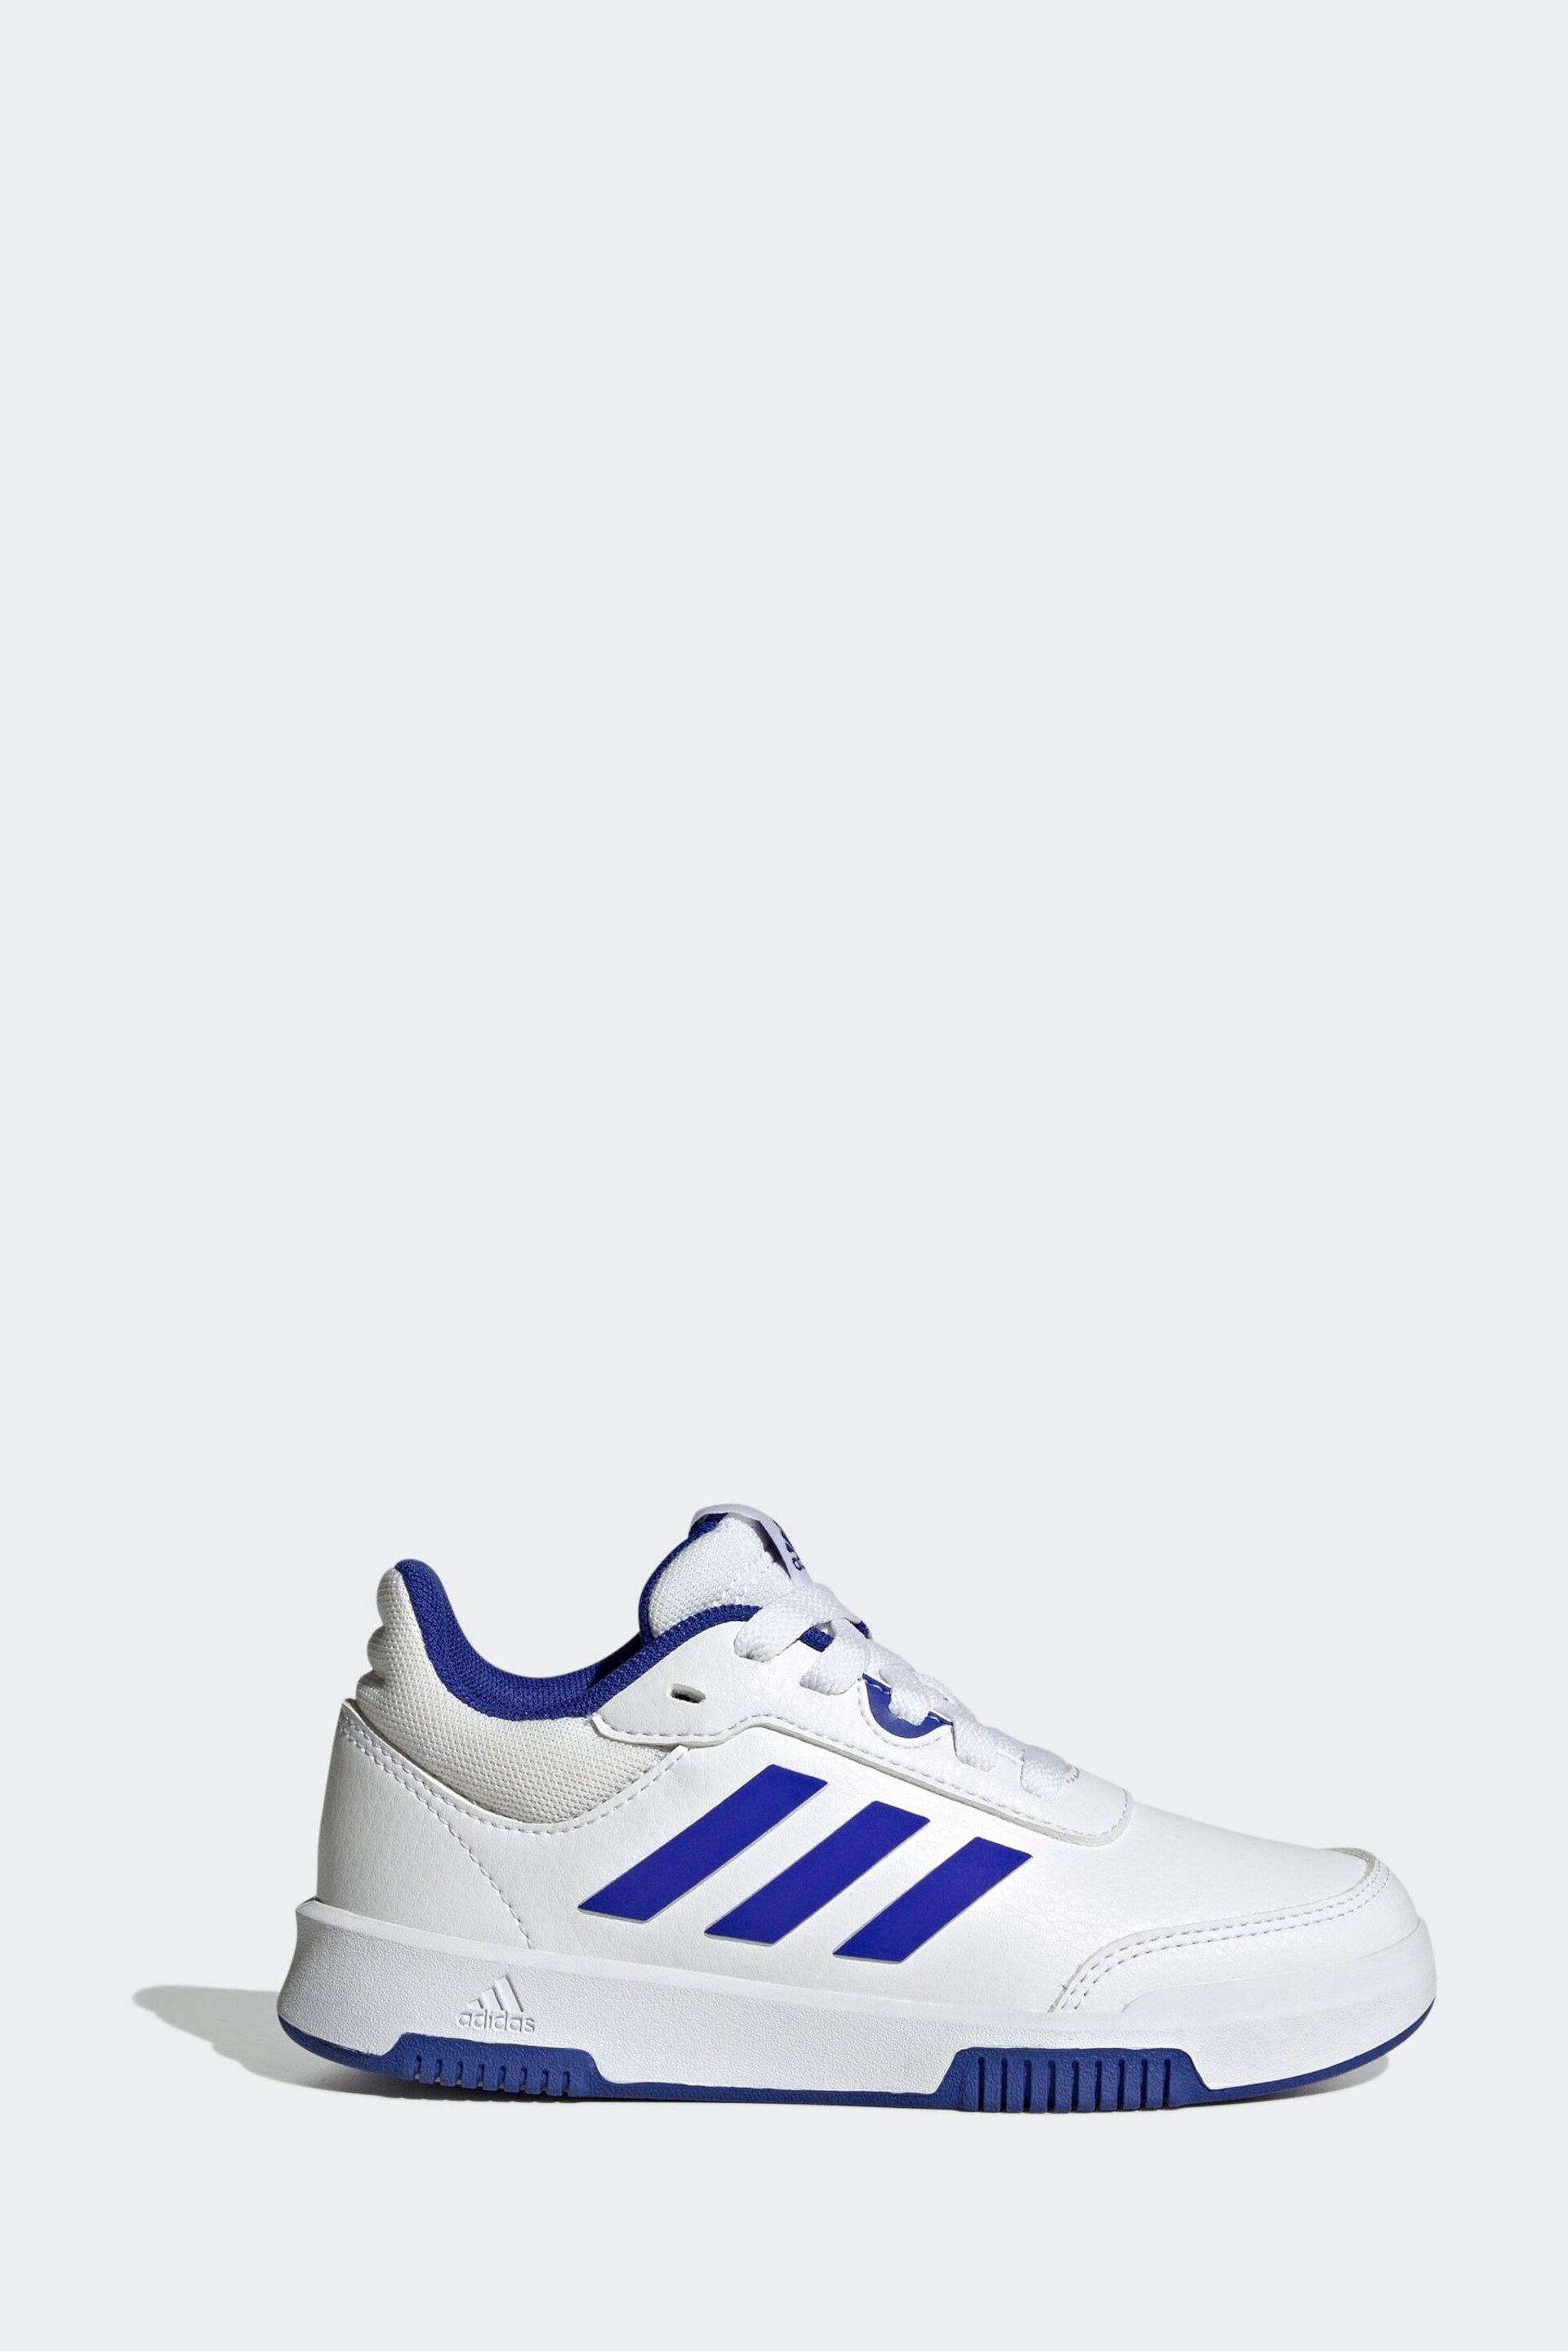 adidas White/Blue Tensaur Sport Training Lace Shoes - Image 1 of 8